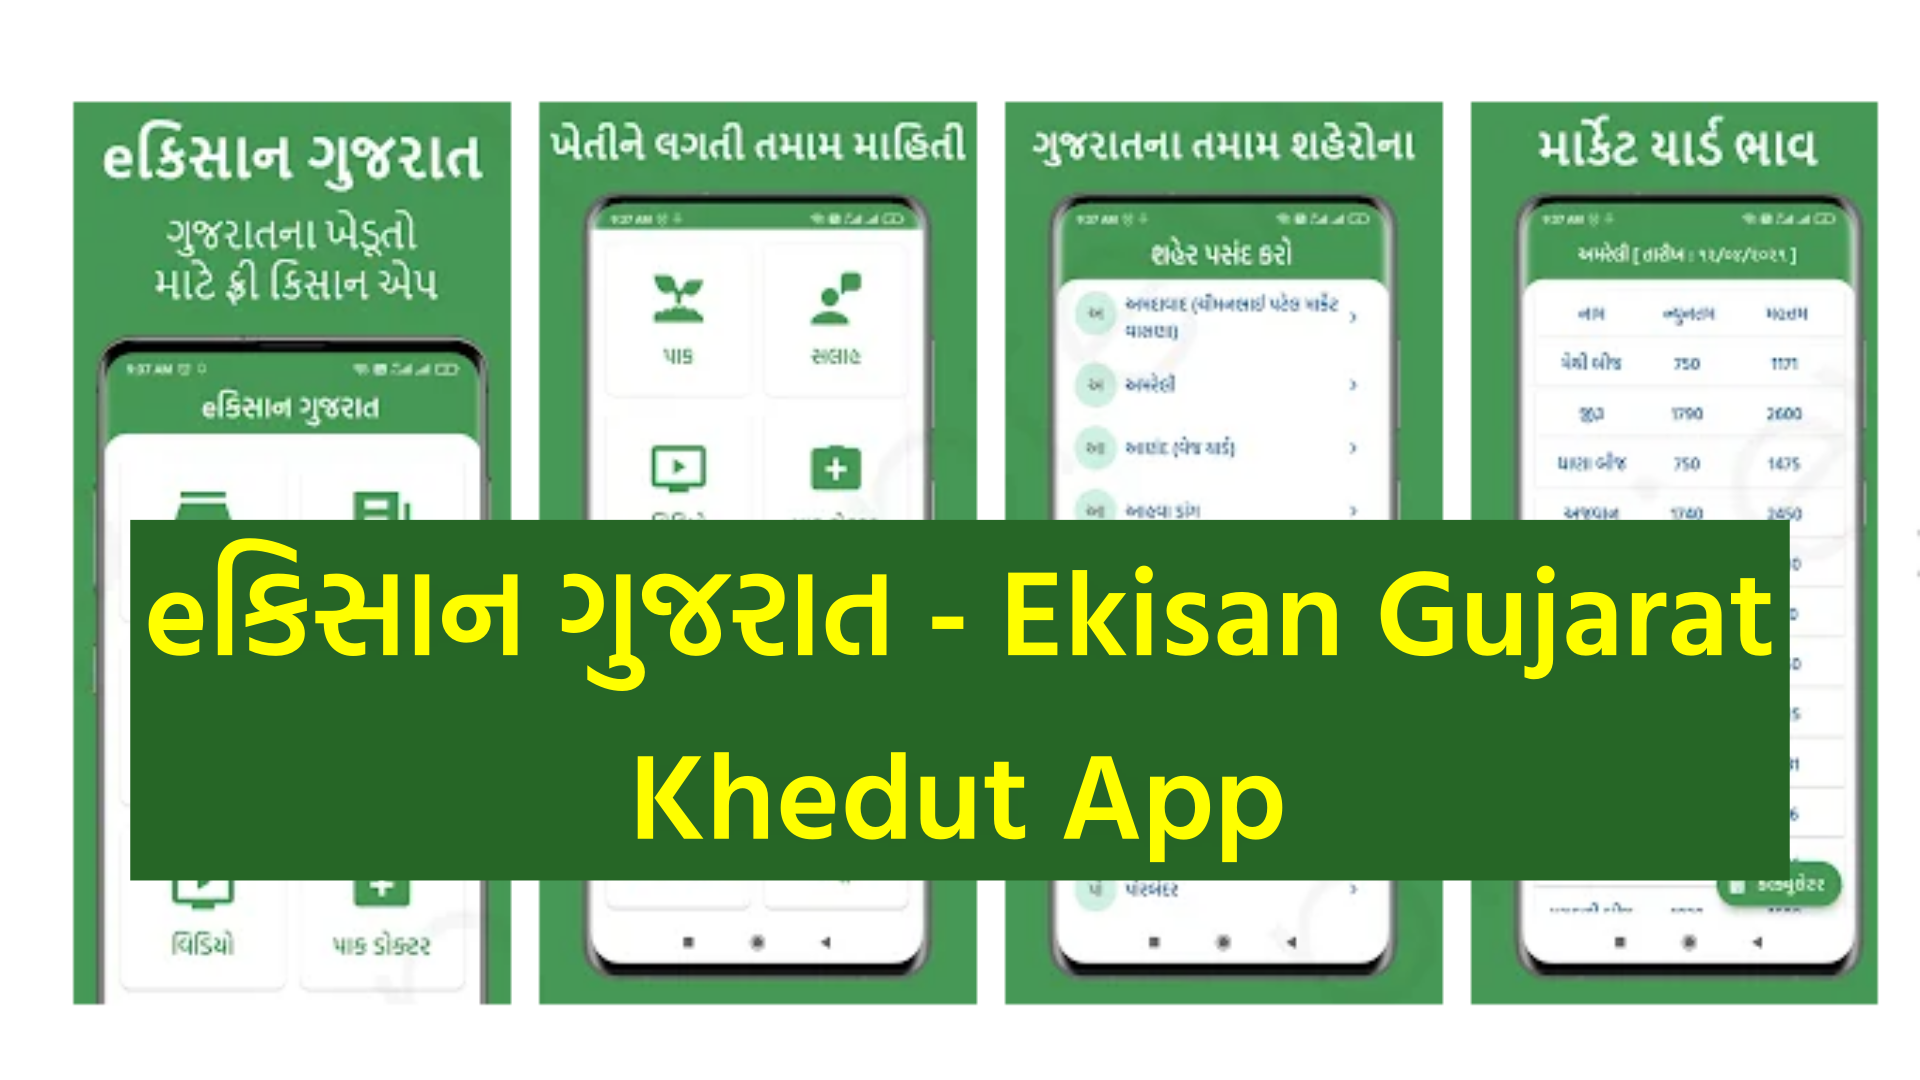 Ekisan Gujarat